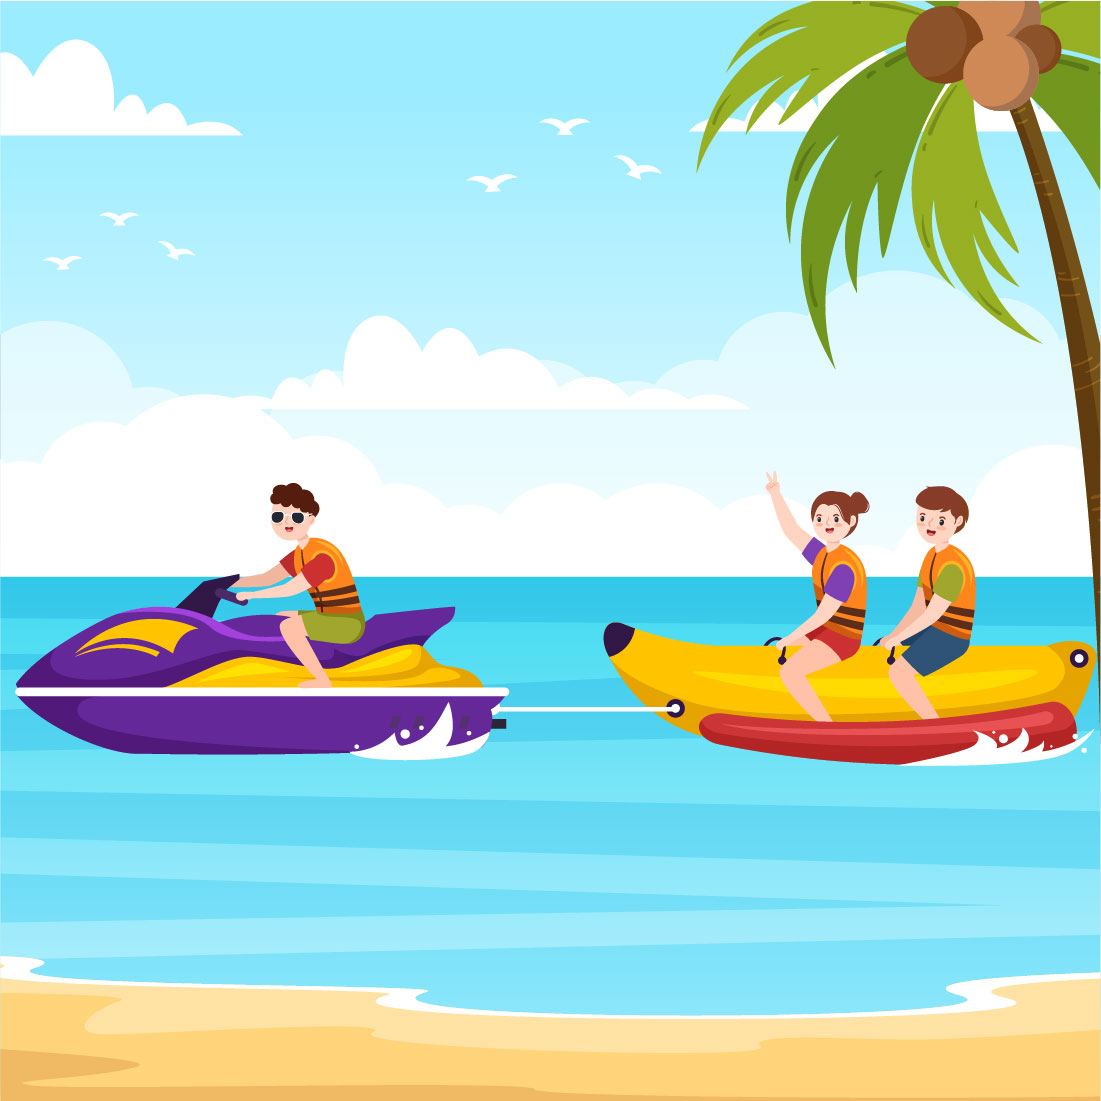 12 Playing Banana Boat and Jet Ski Illustration cover image.